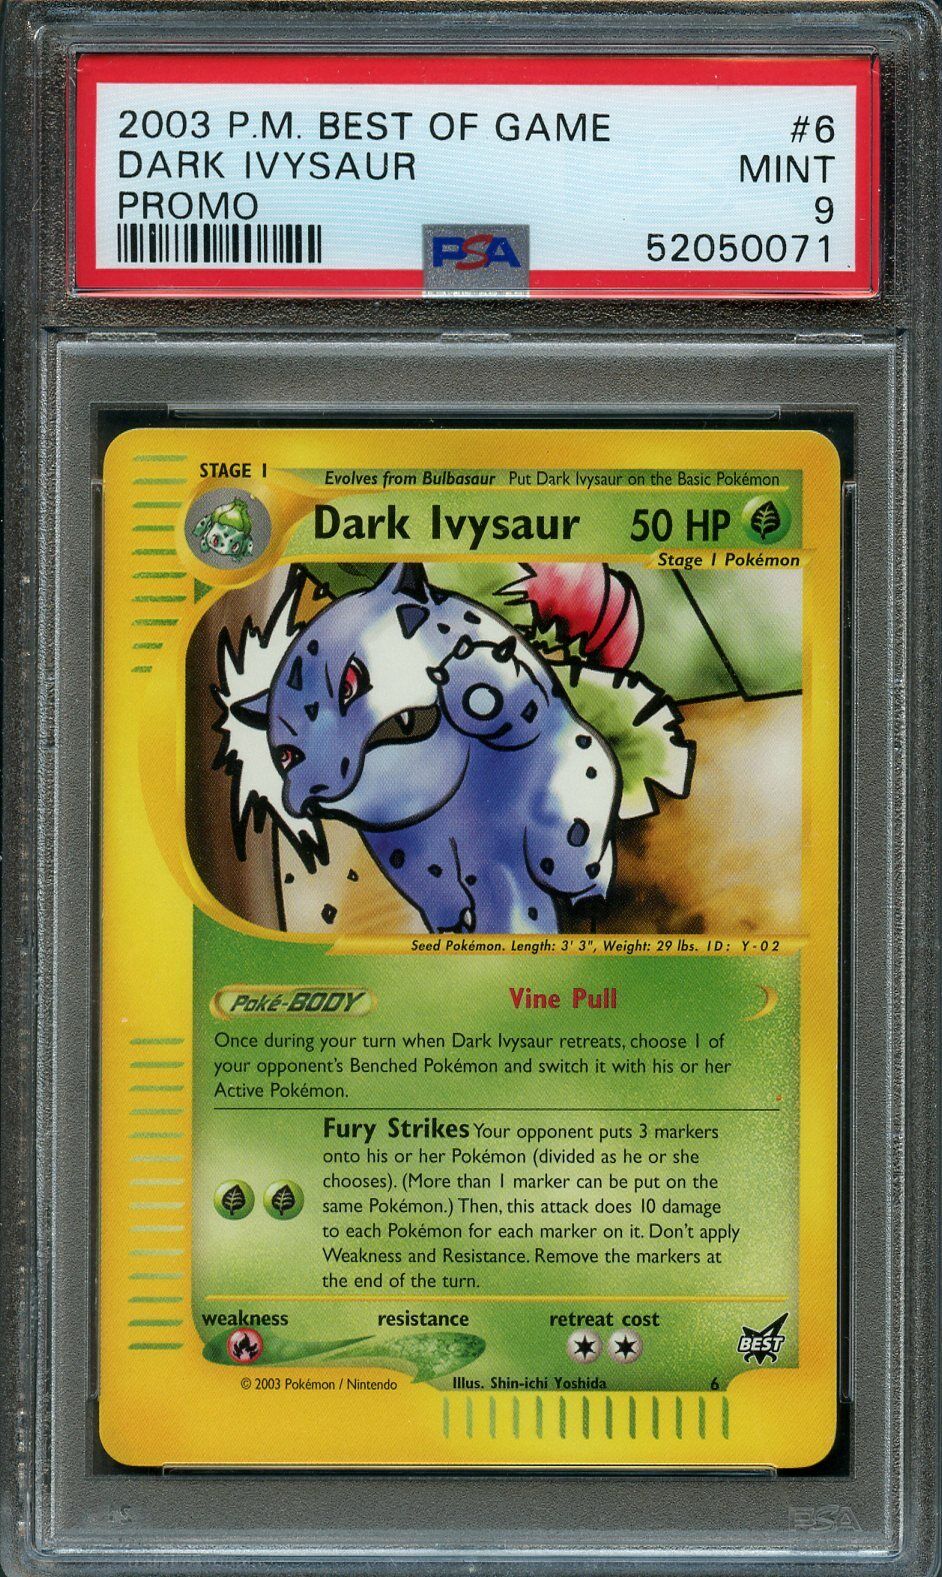 PSA 9 MINT Dark Ivysaur # 6 Best of Game PROMO Pokemon Card